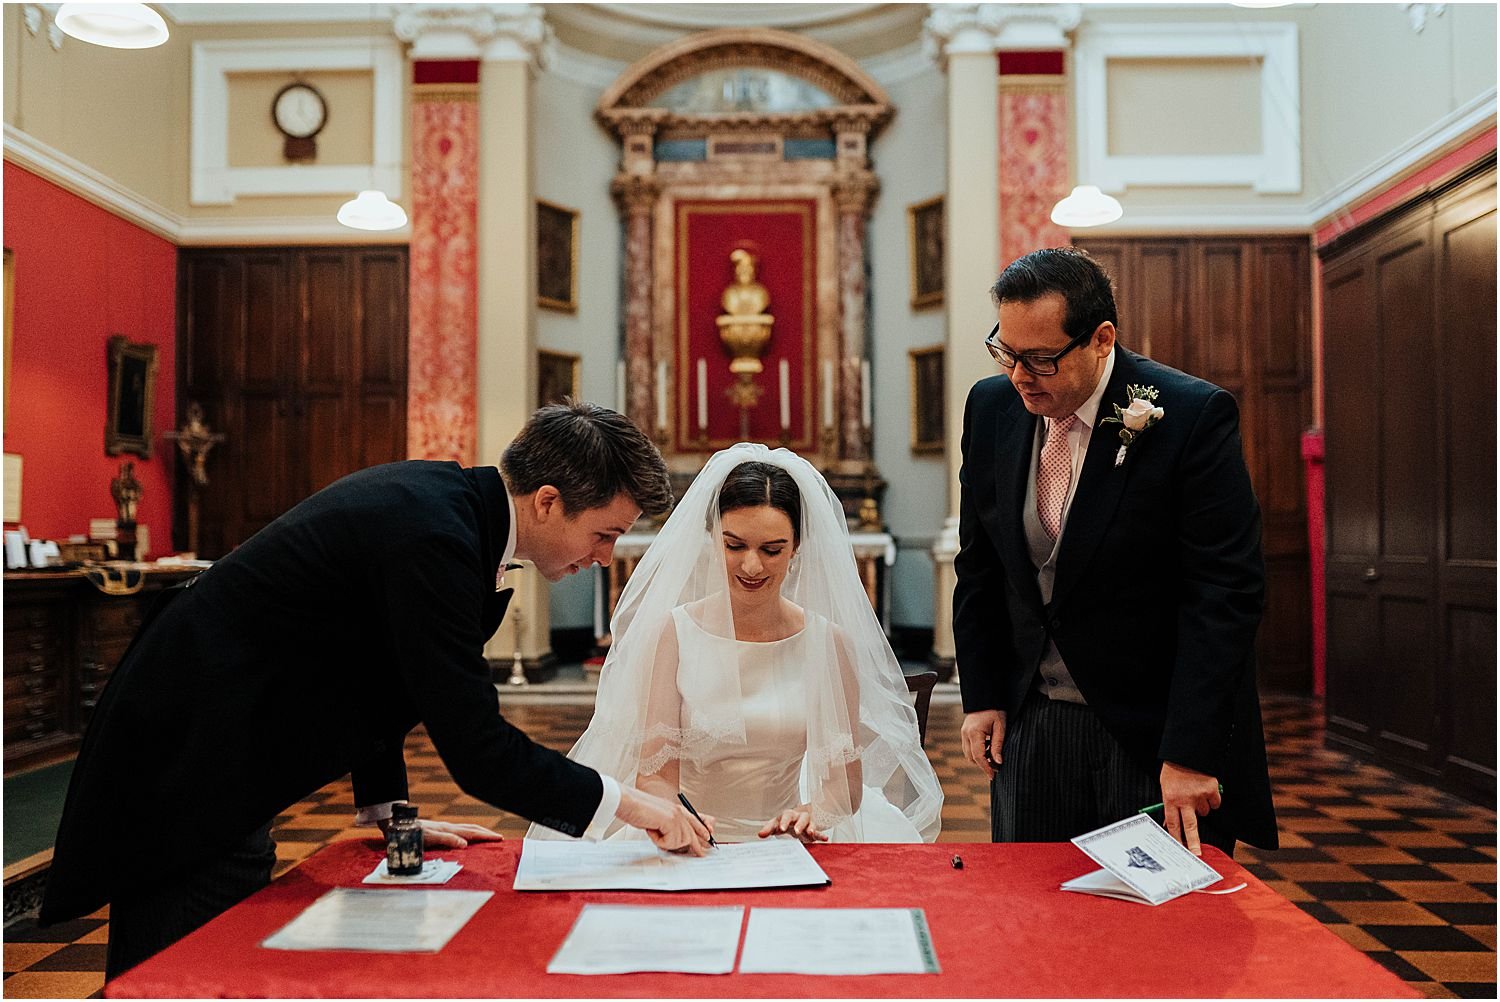 Bride and groom signing wedding register